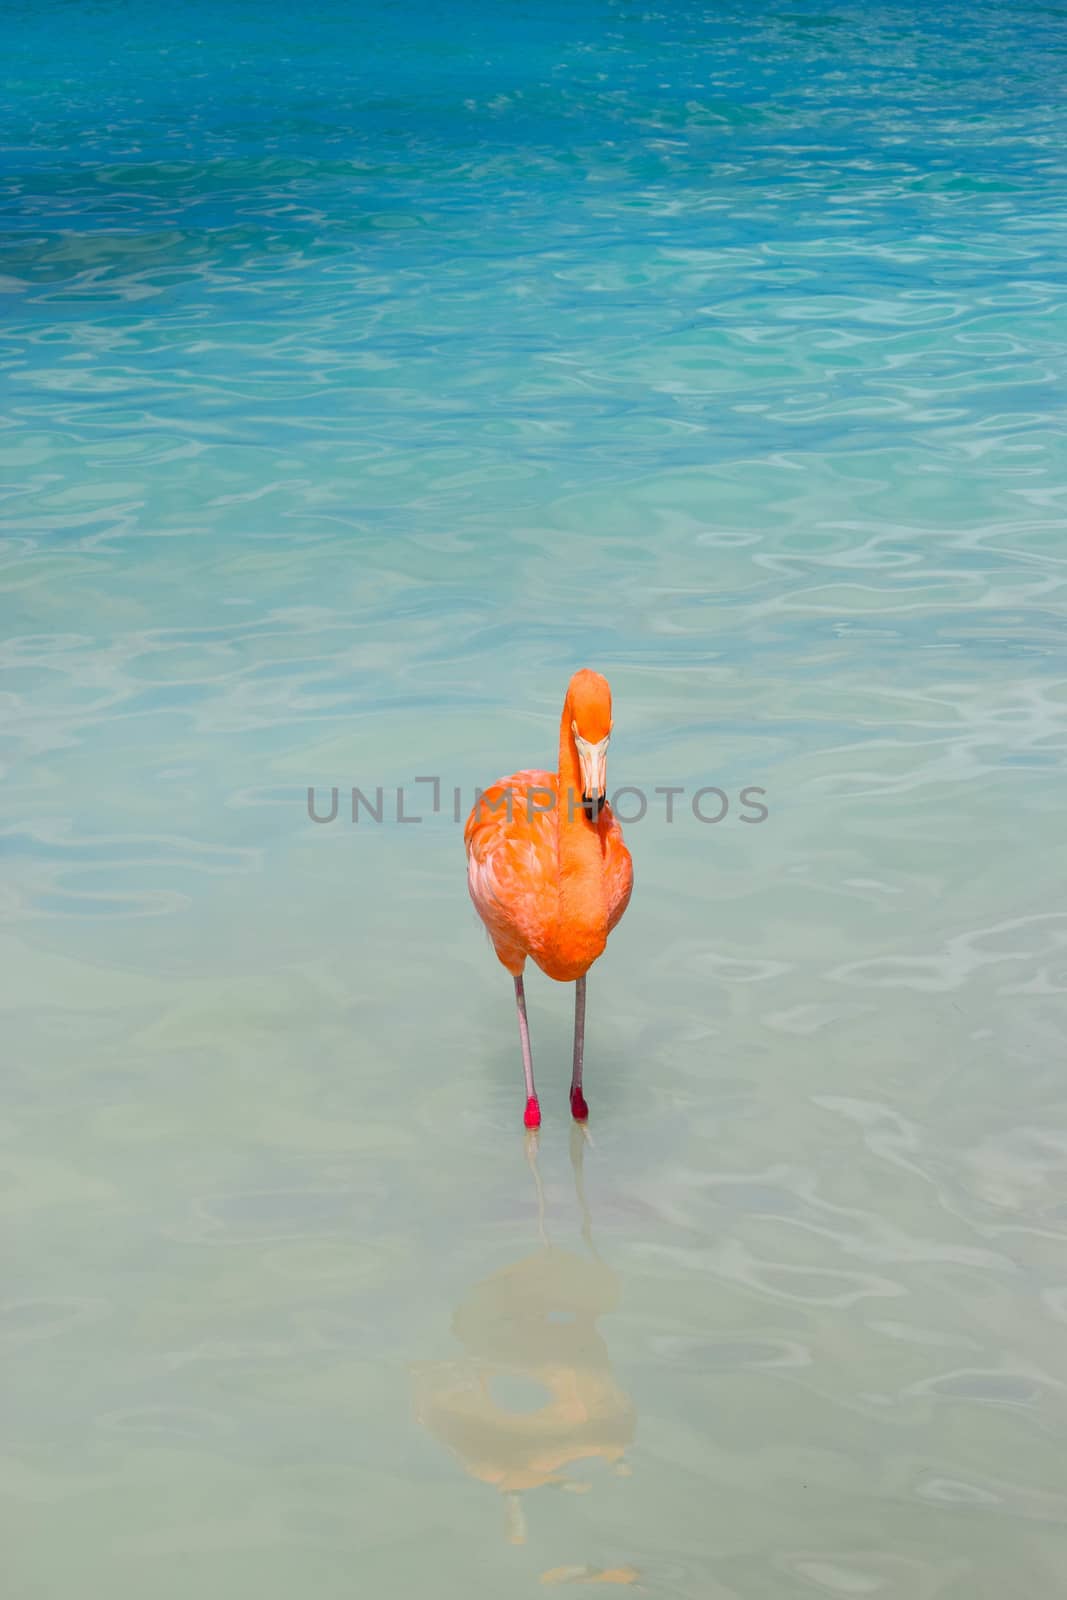 Aruba, Renaissance Island, Caribbean Sea. Sunny beach with white sand, coconut palm trees and turquoise sea. Summer vacation, tropical beach and pink flamingos by matteobartolini